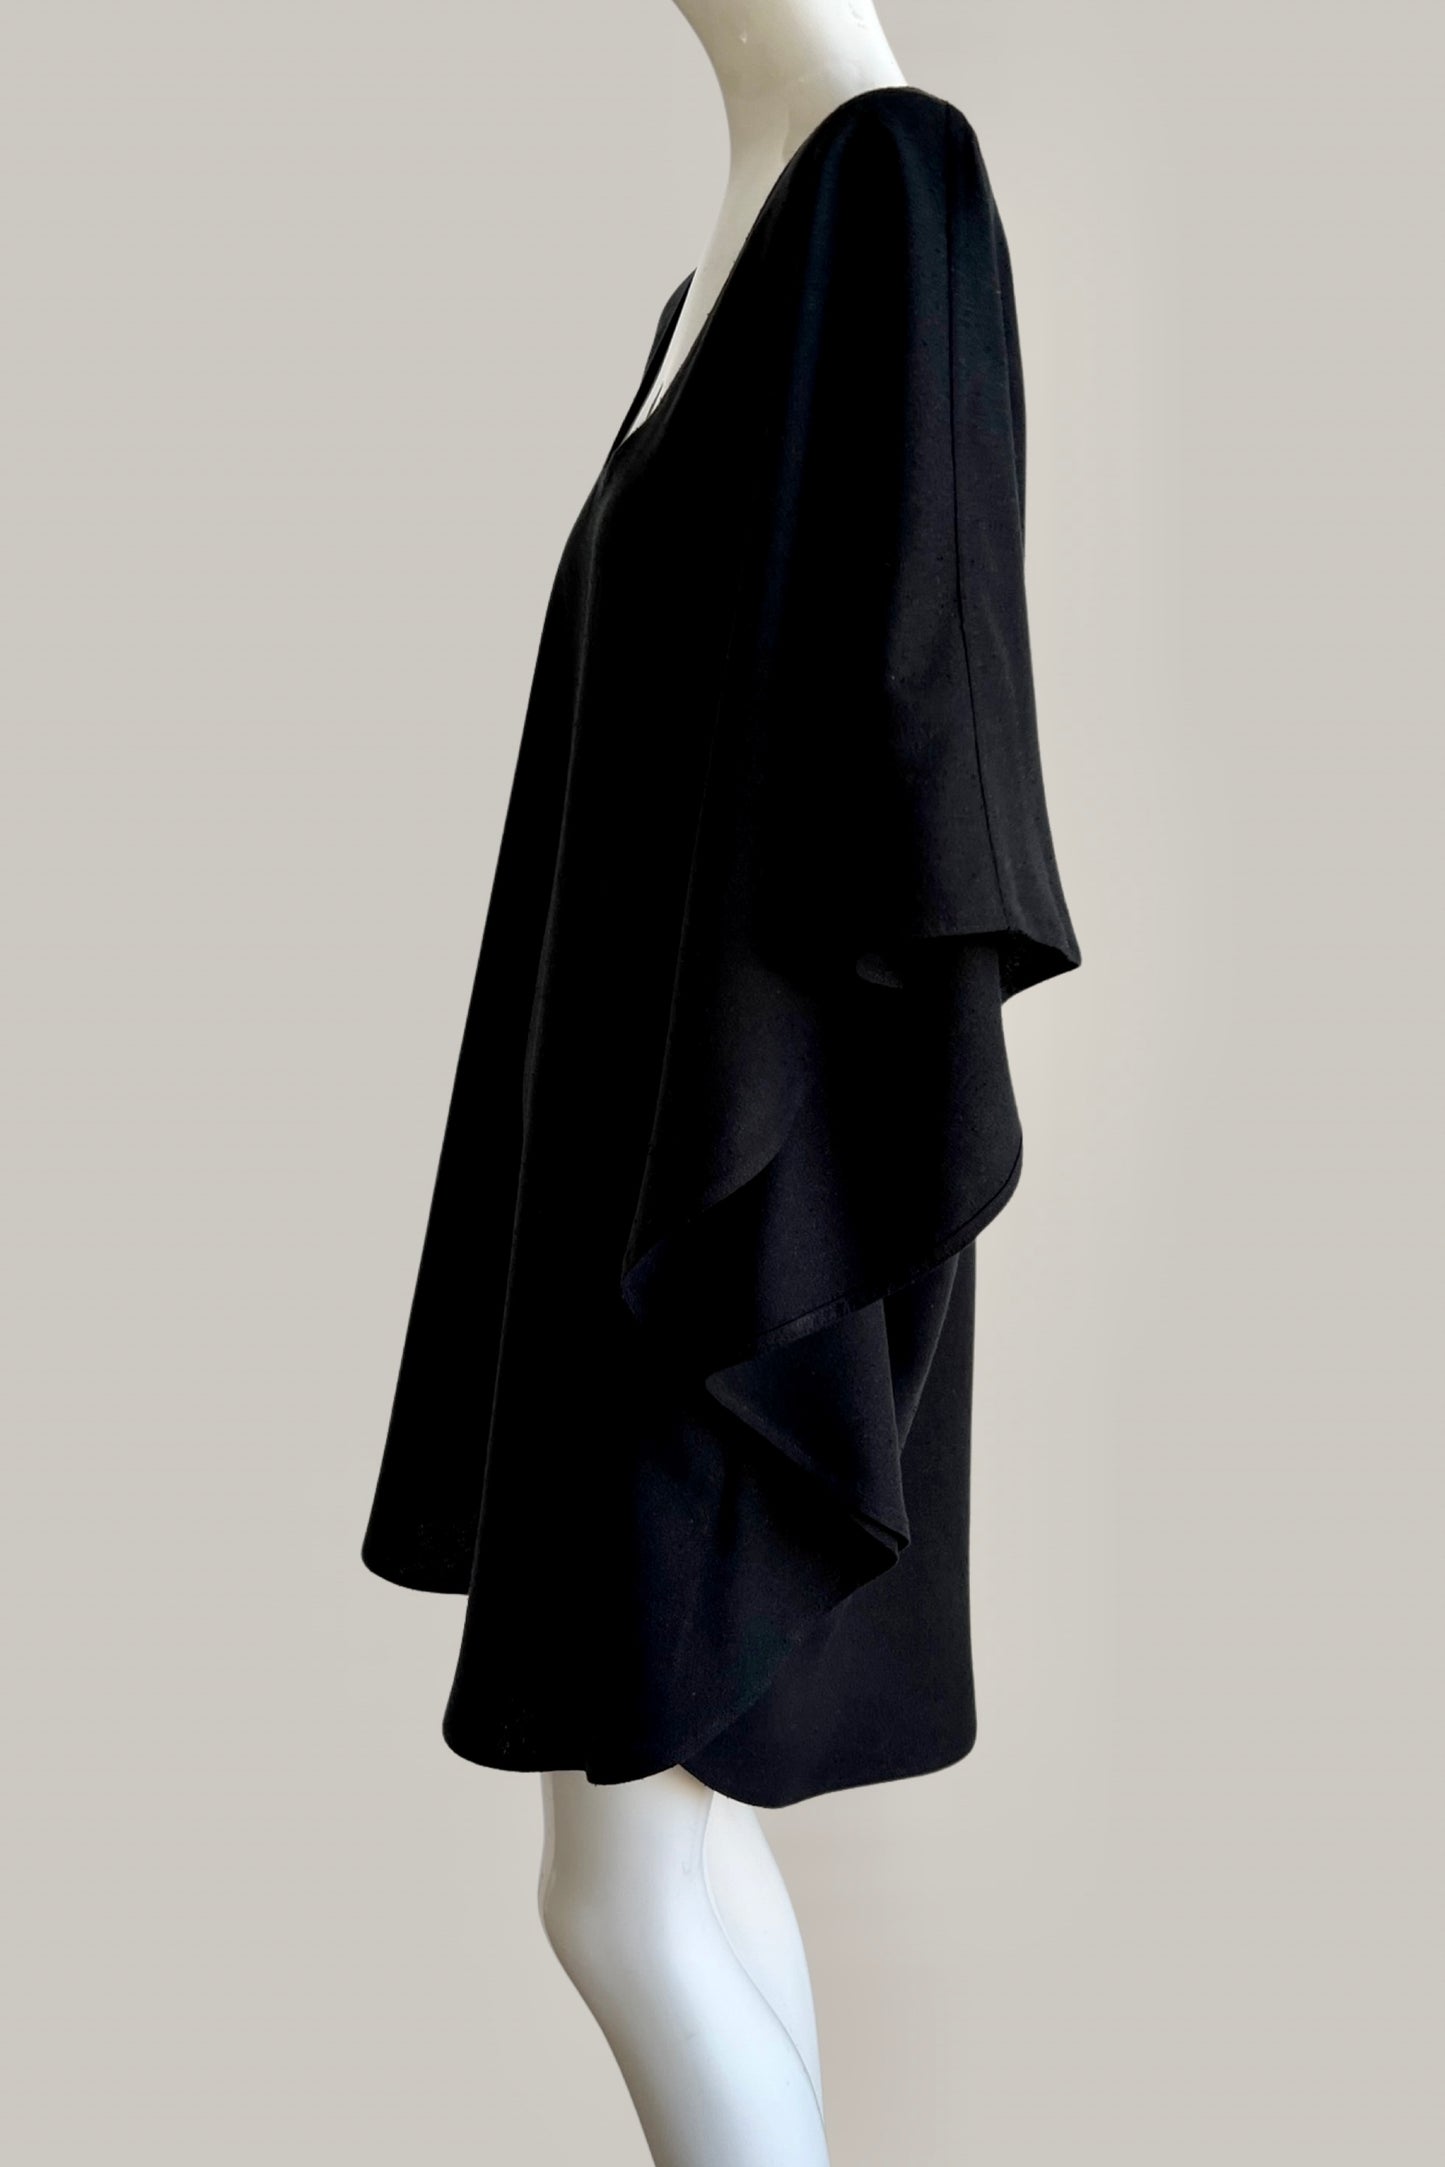 Half Moon Pullover Dress Black Kohl {Made to Order}